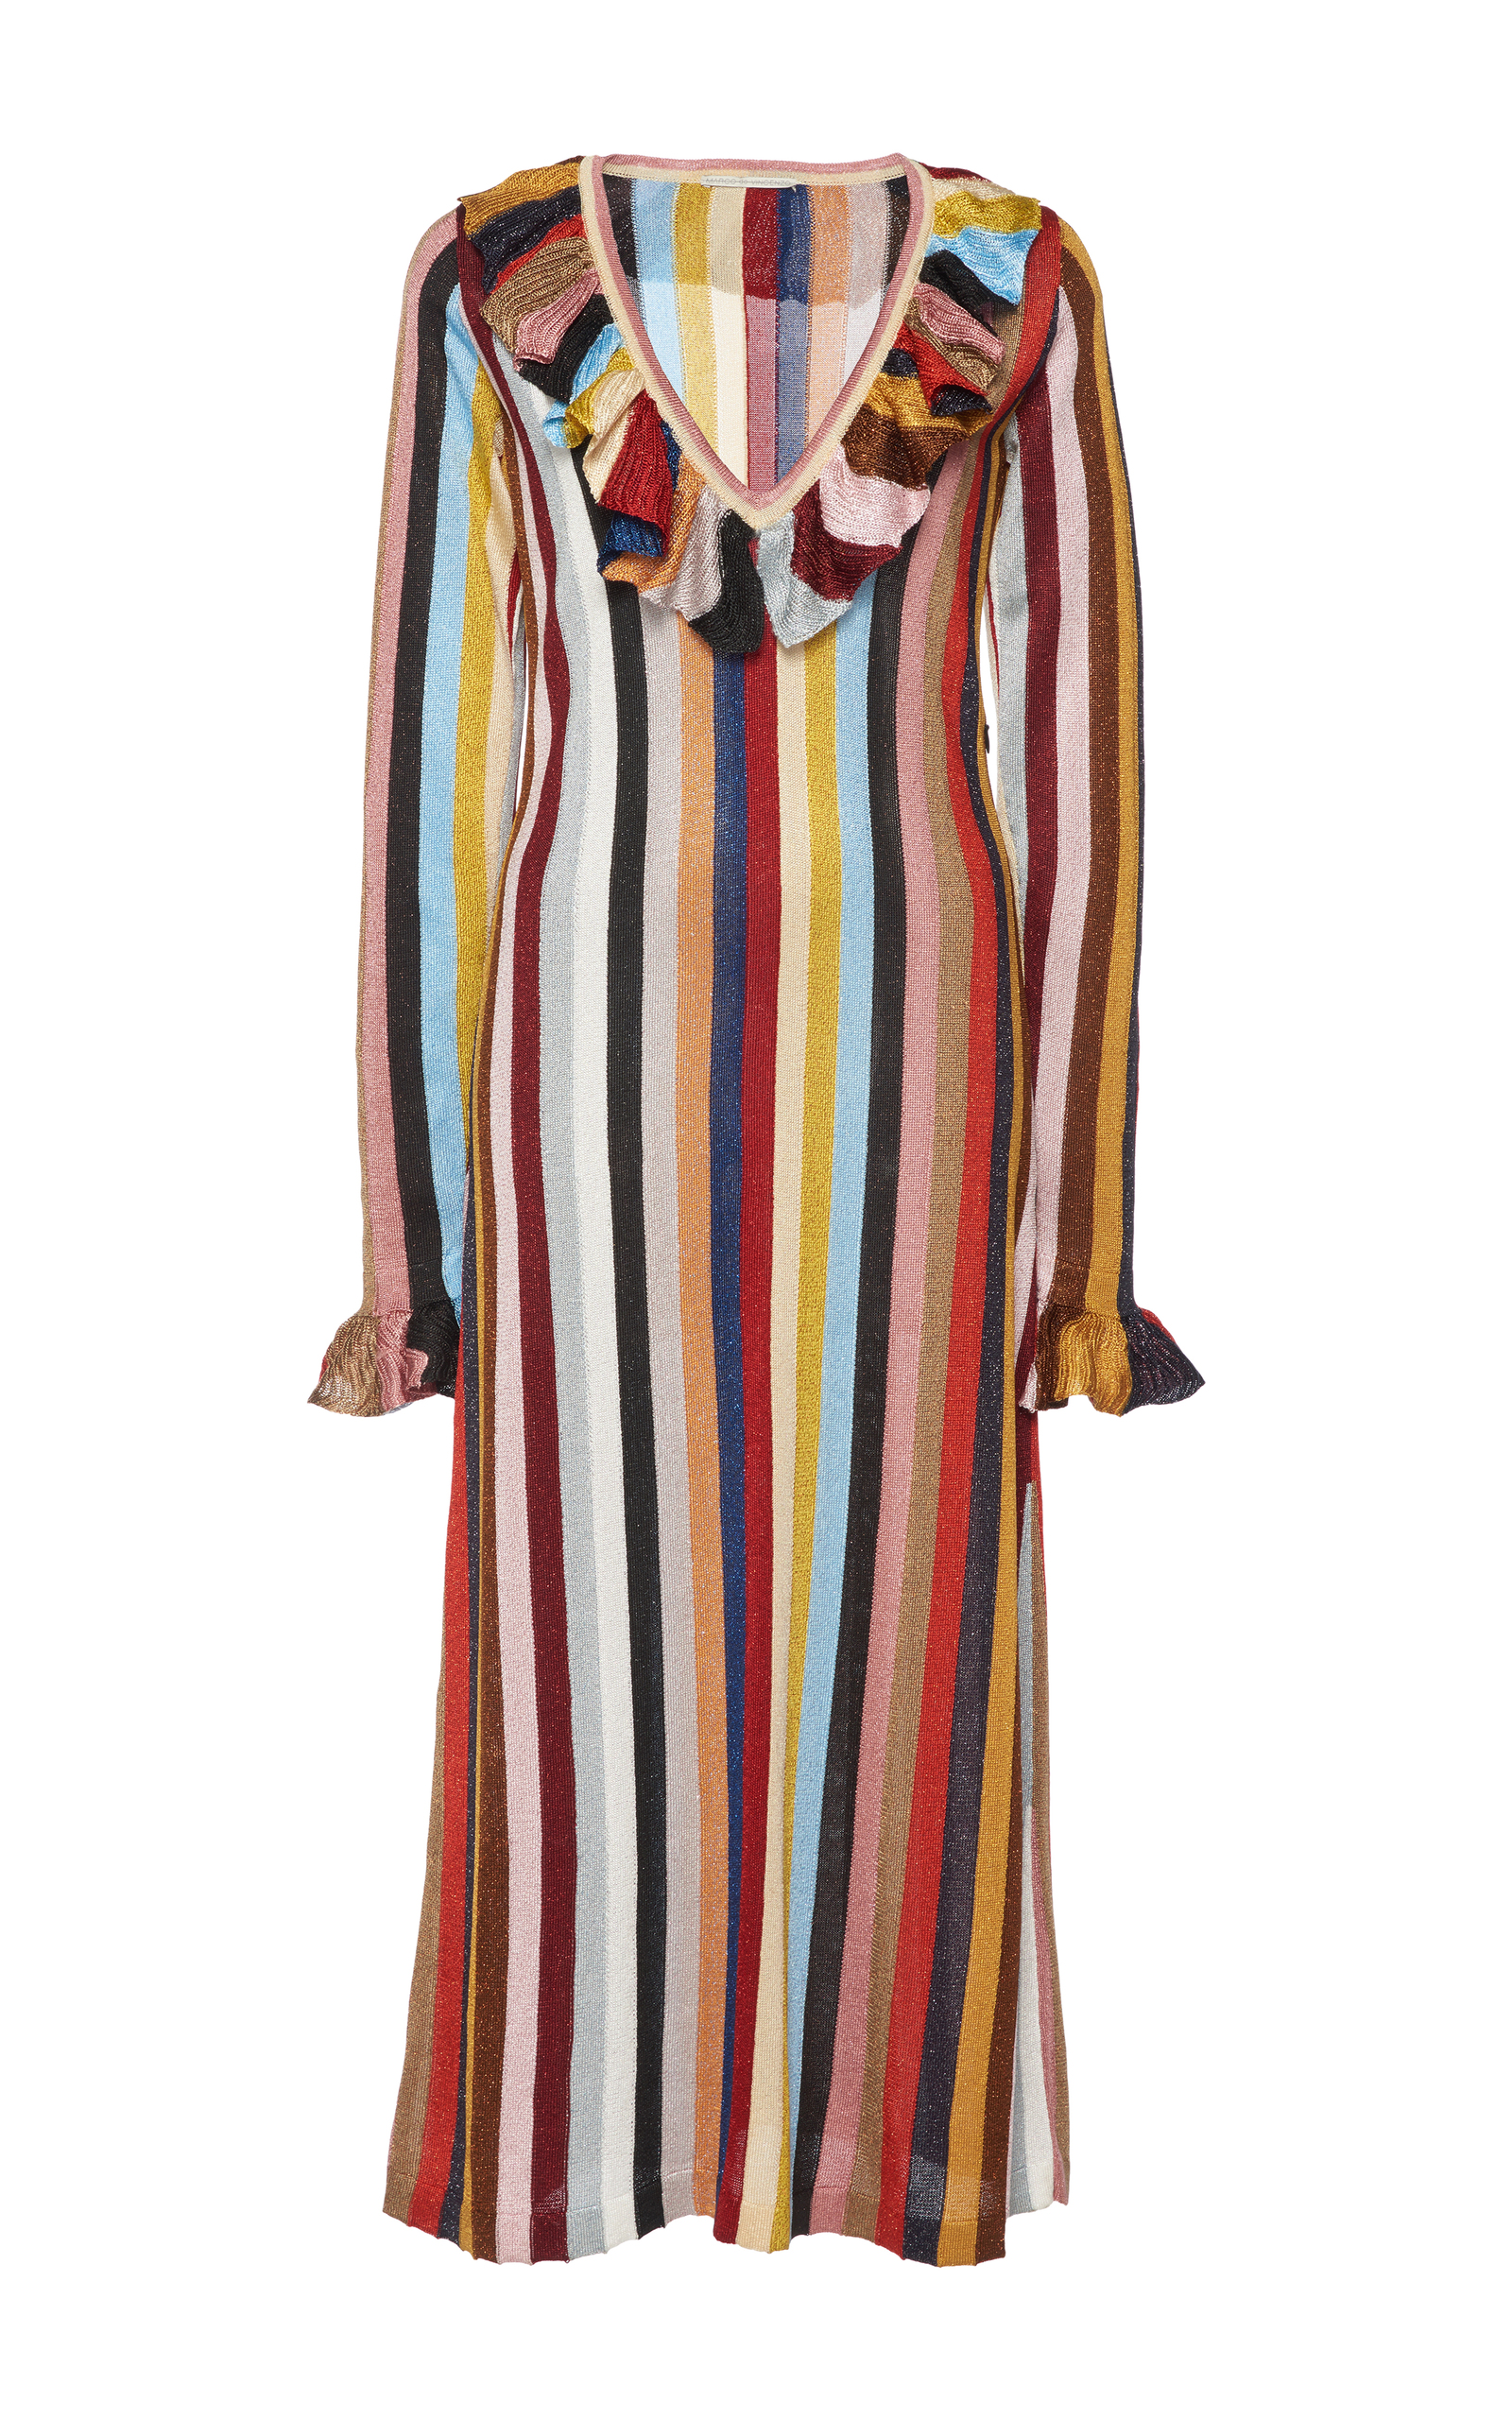 Ruffled Striped Dress by Marco de Vincenzo | Moda Operandi